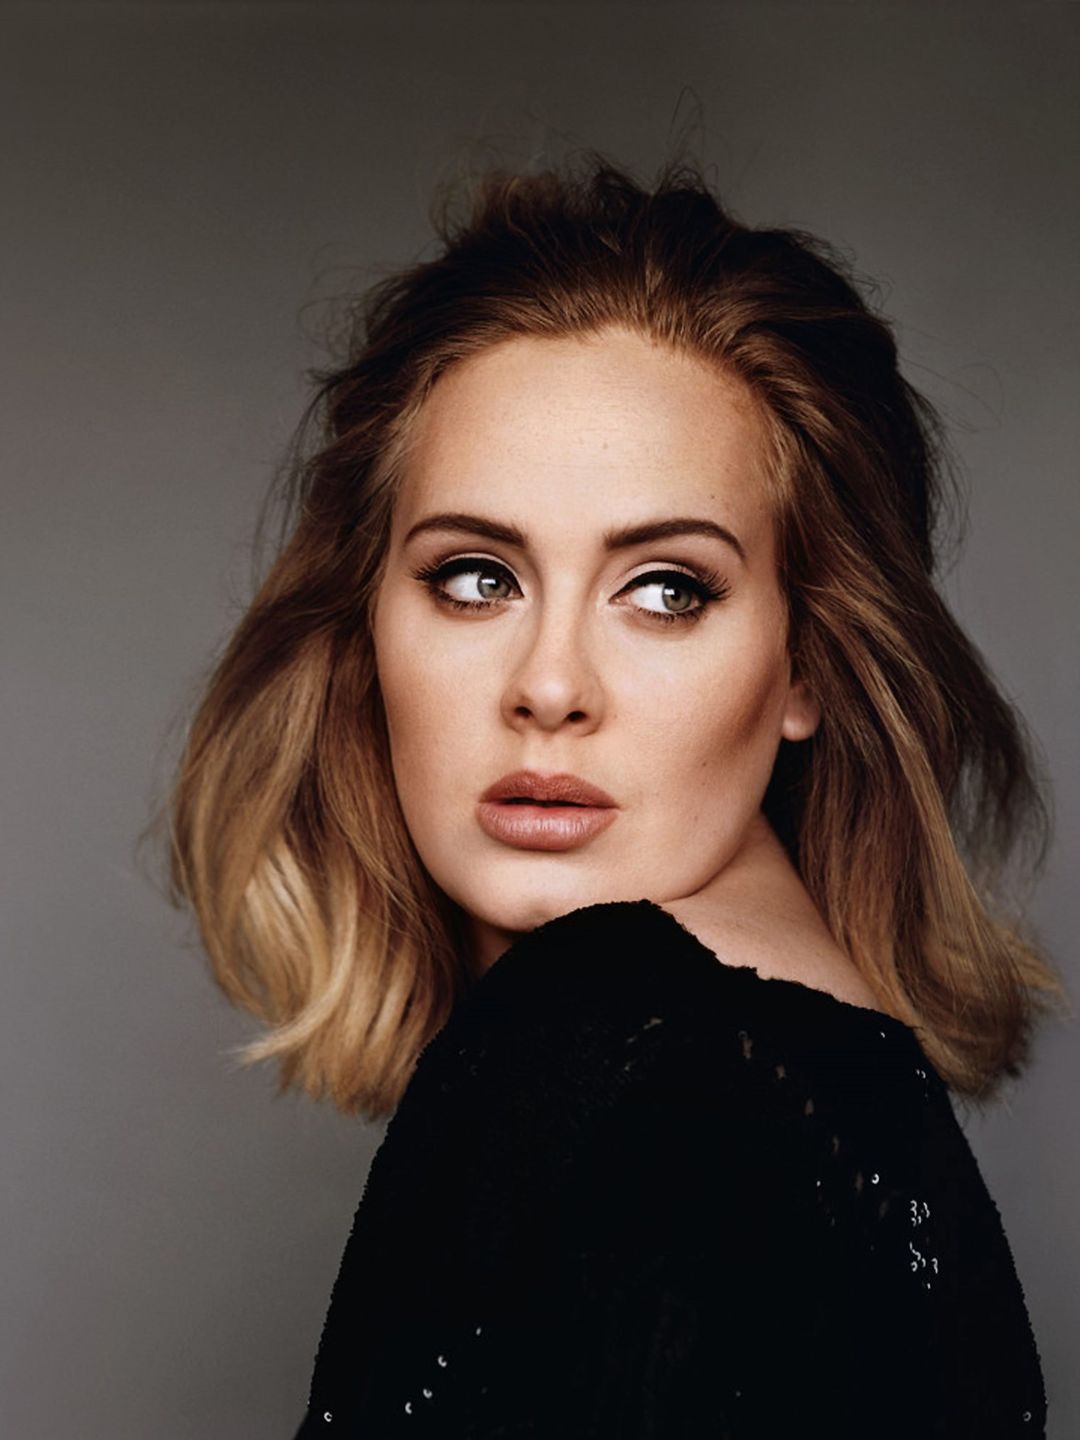 Adele biography